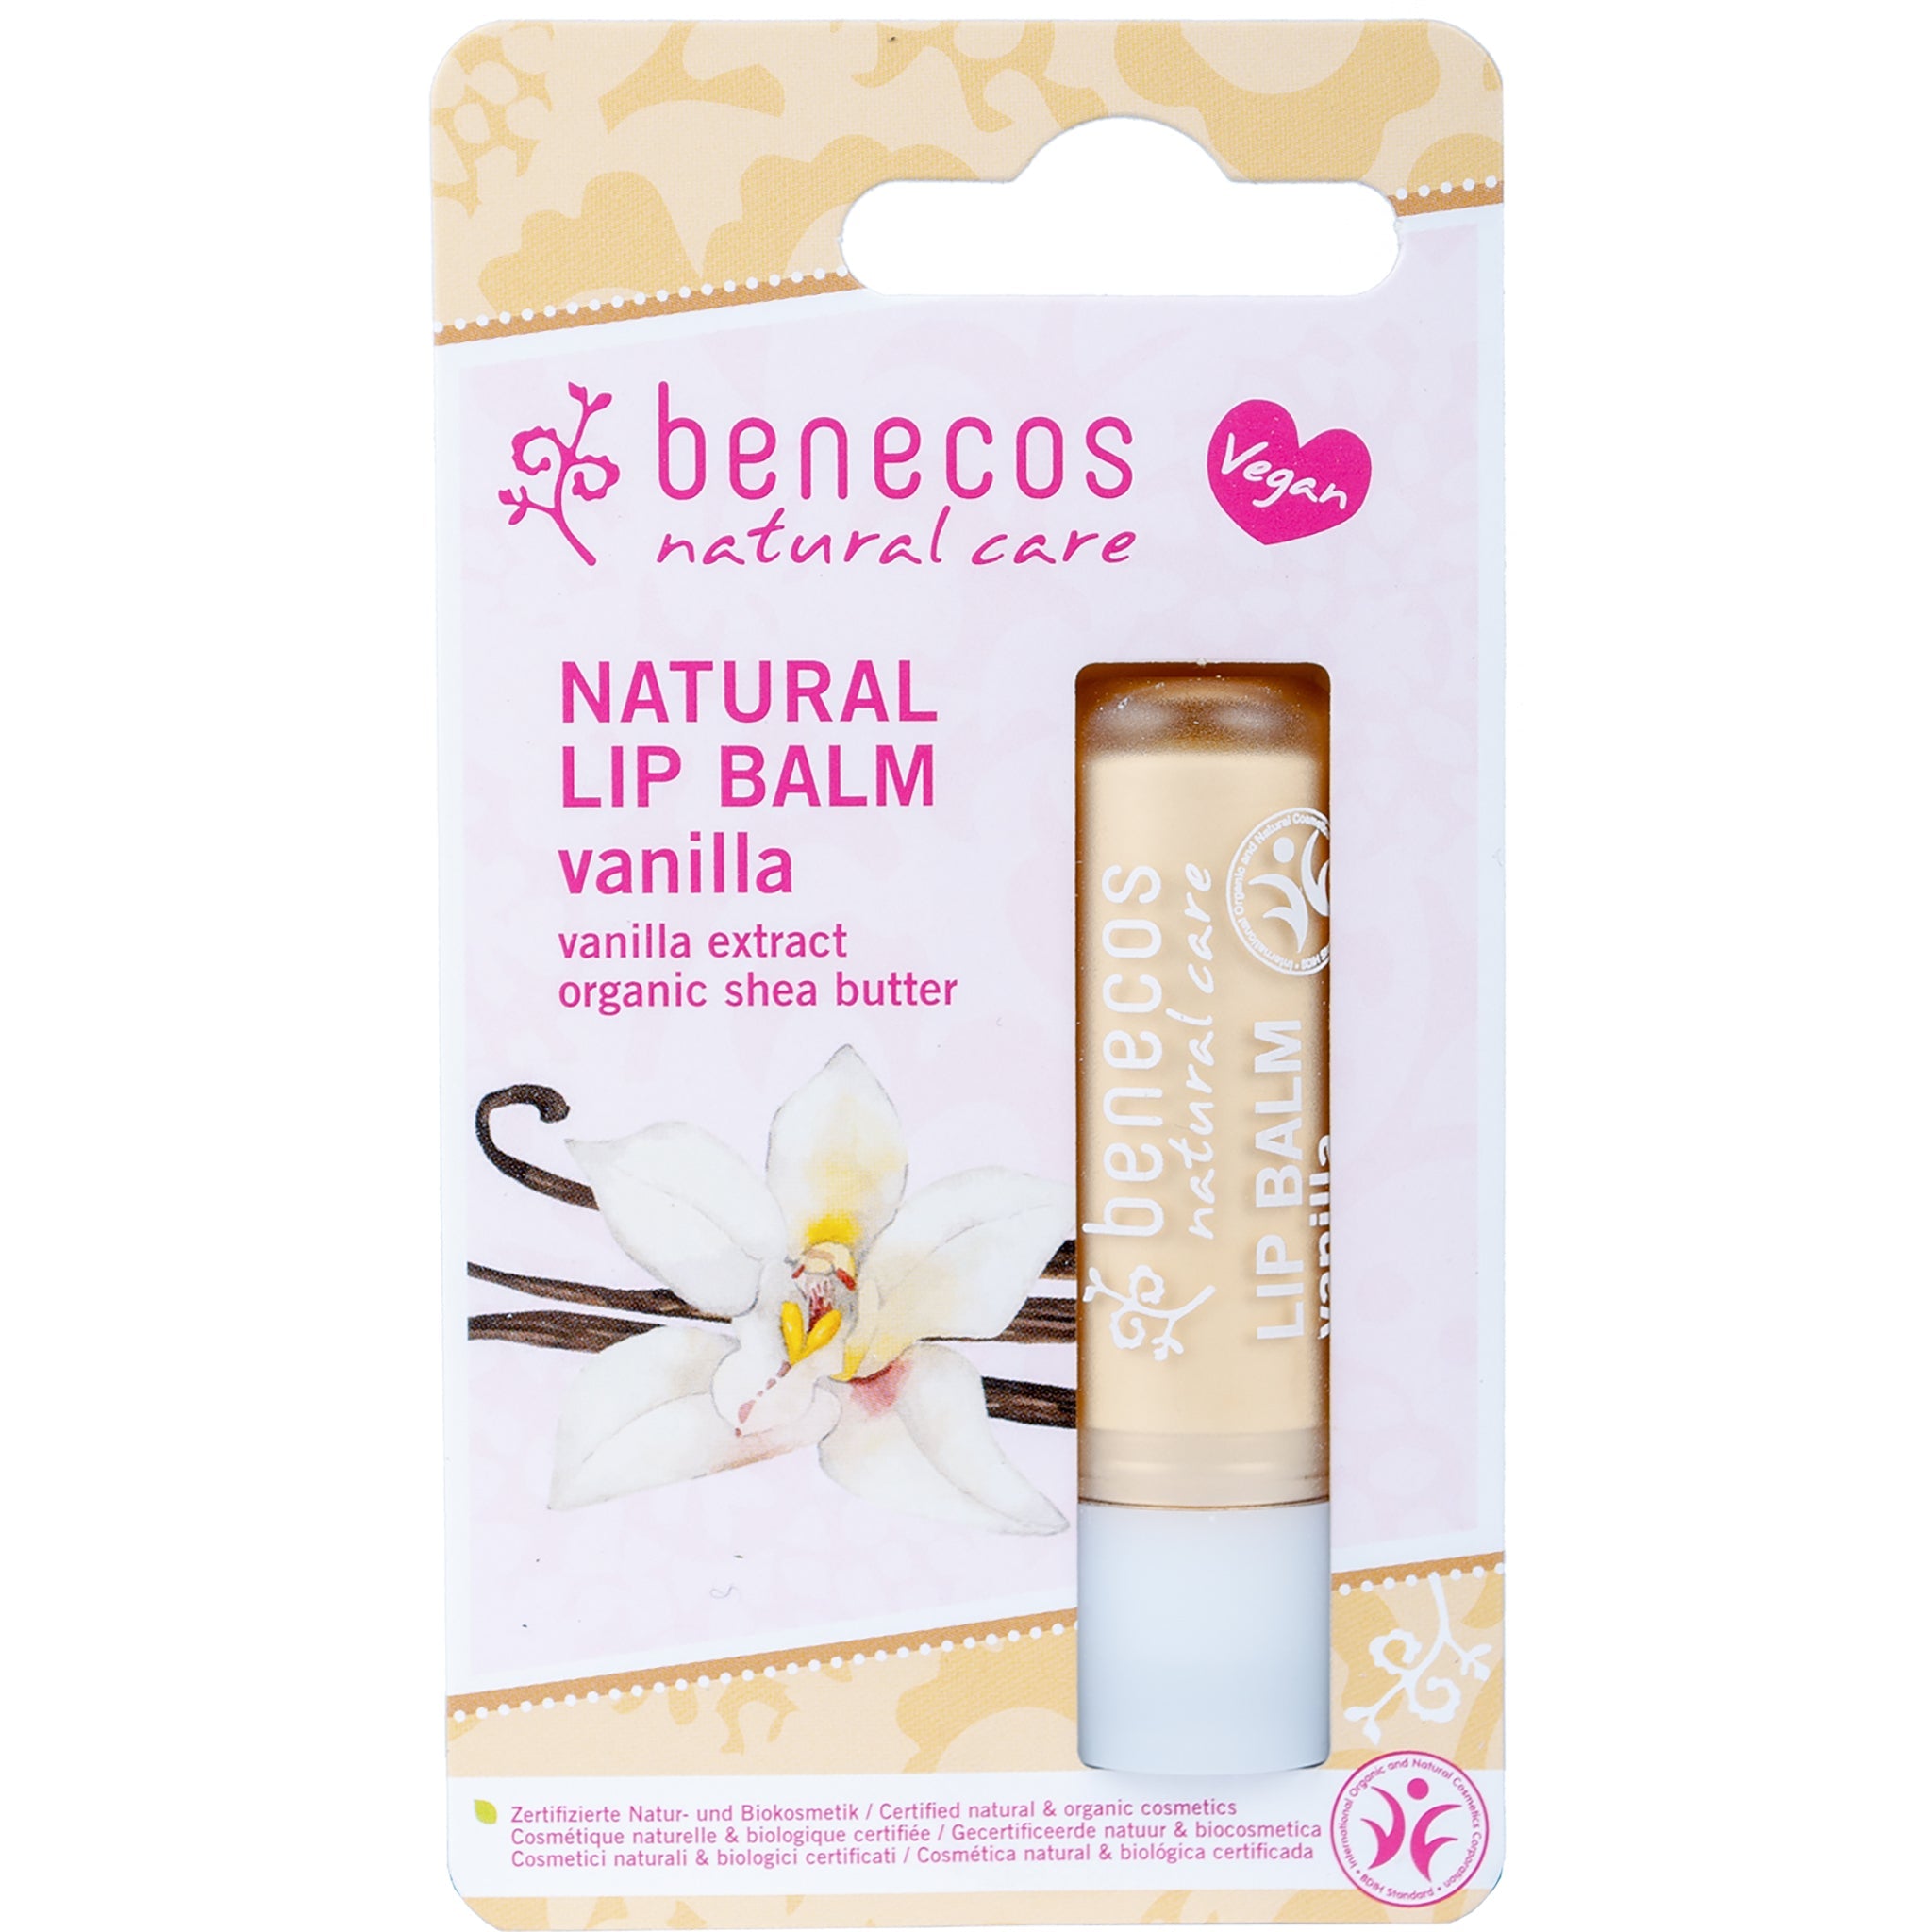 Natural Lip Balm - Vanilla - mypure.co.uk